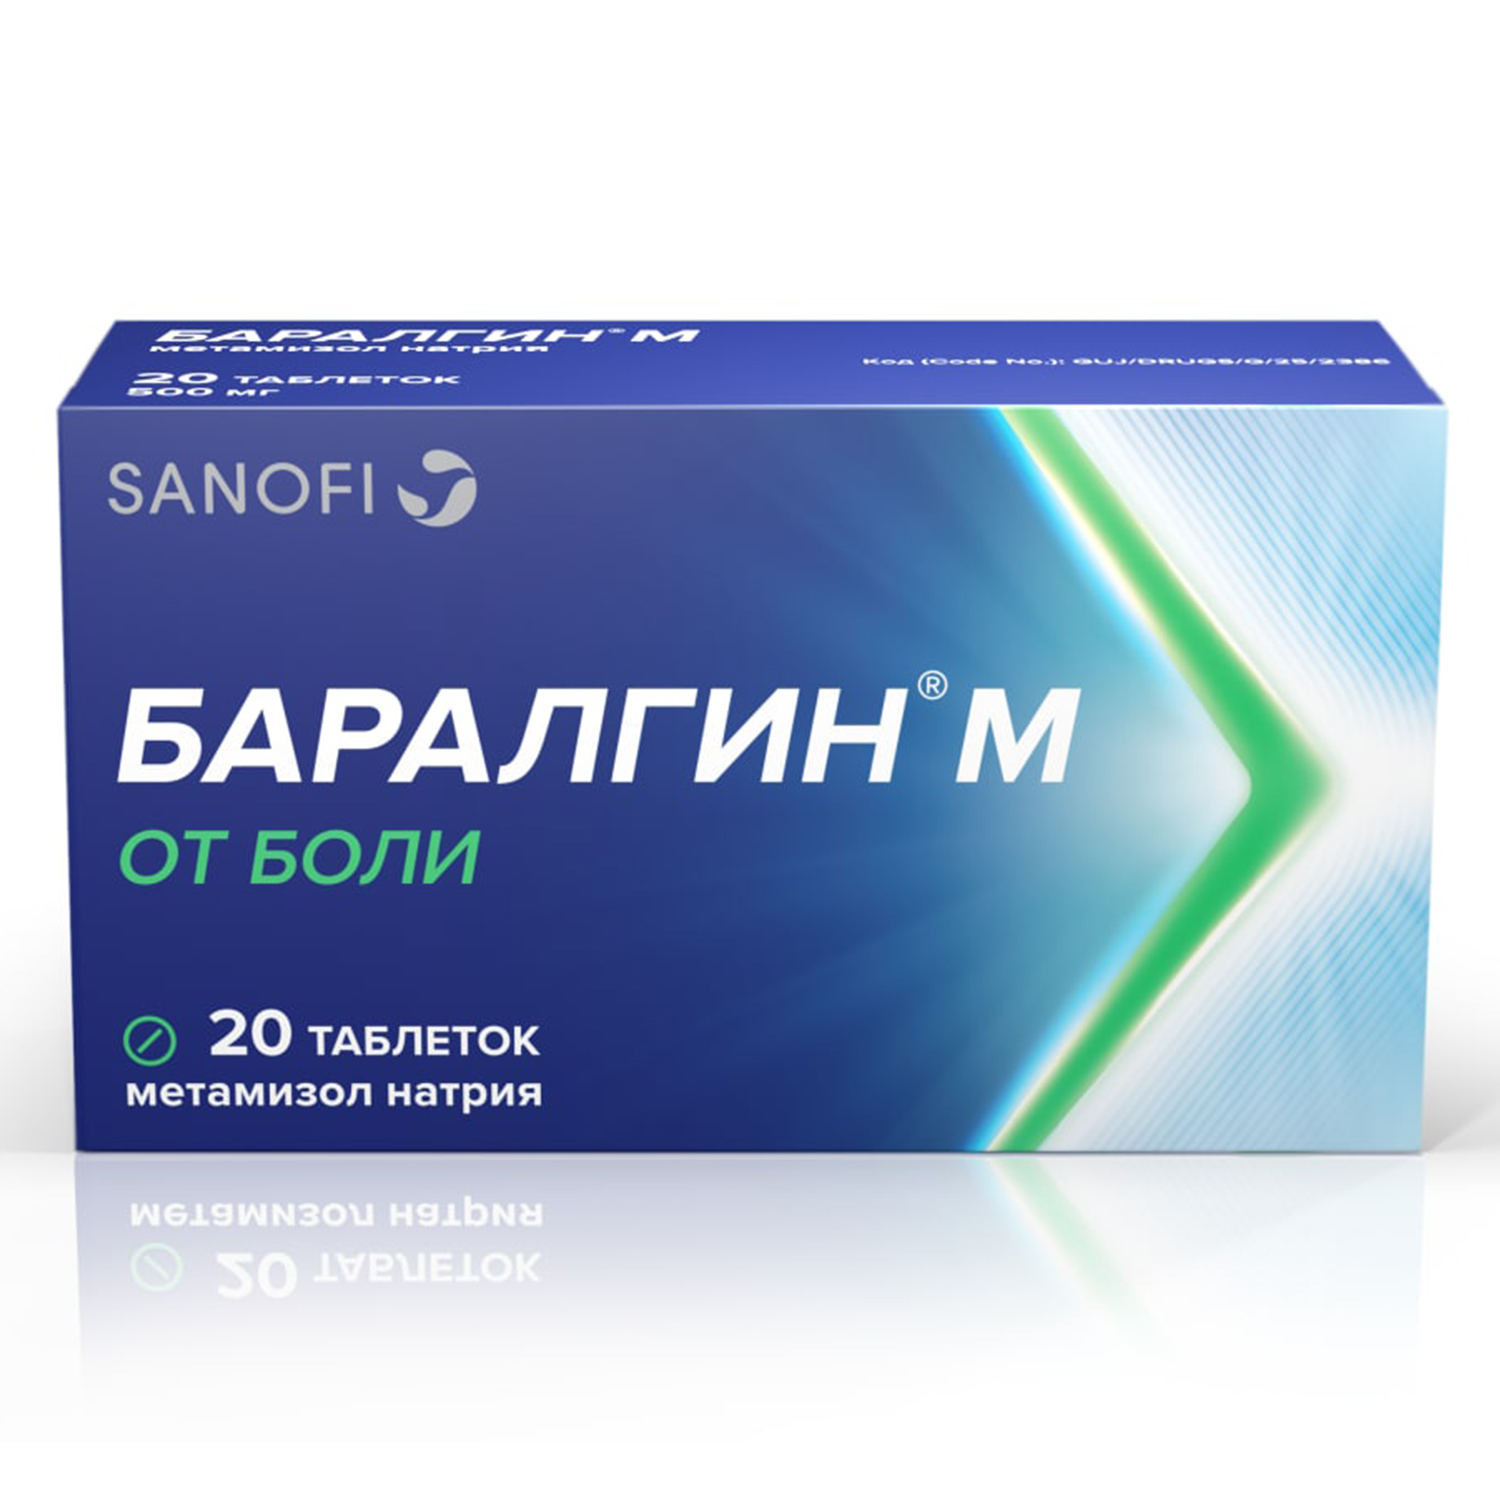 Баралгин М, таблетки 500 мг, 20 шт. баралгин м таблетки 500 мг 20 шт